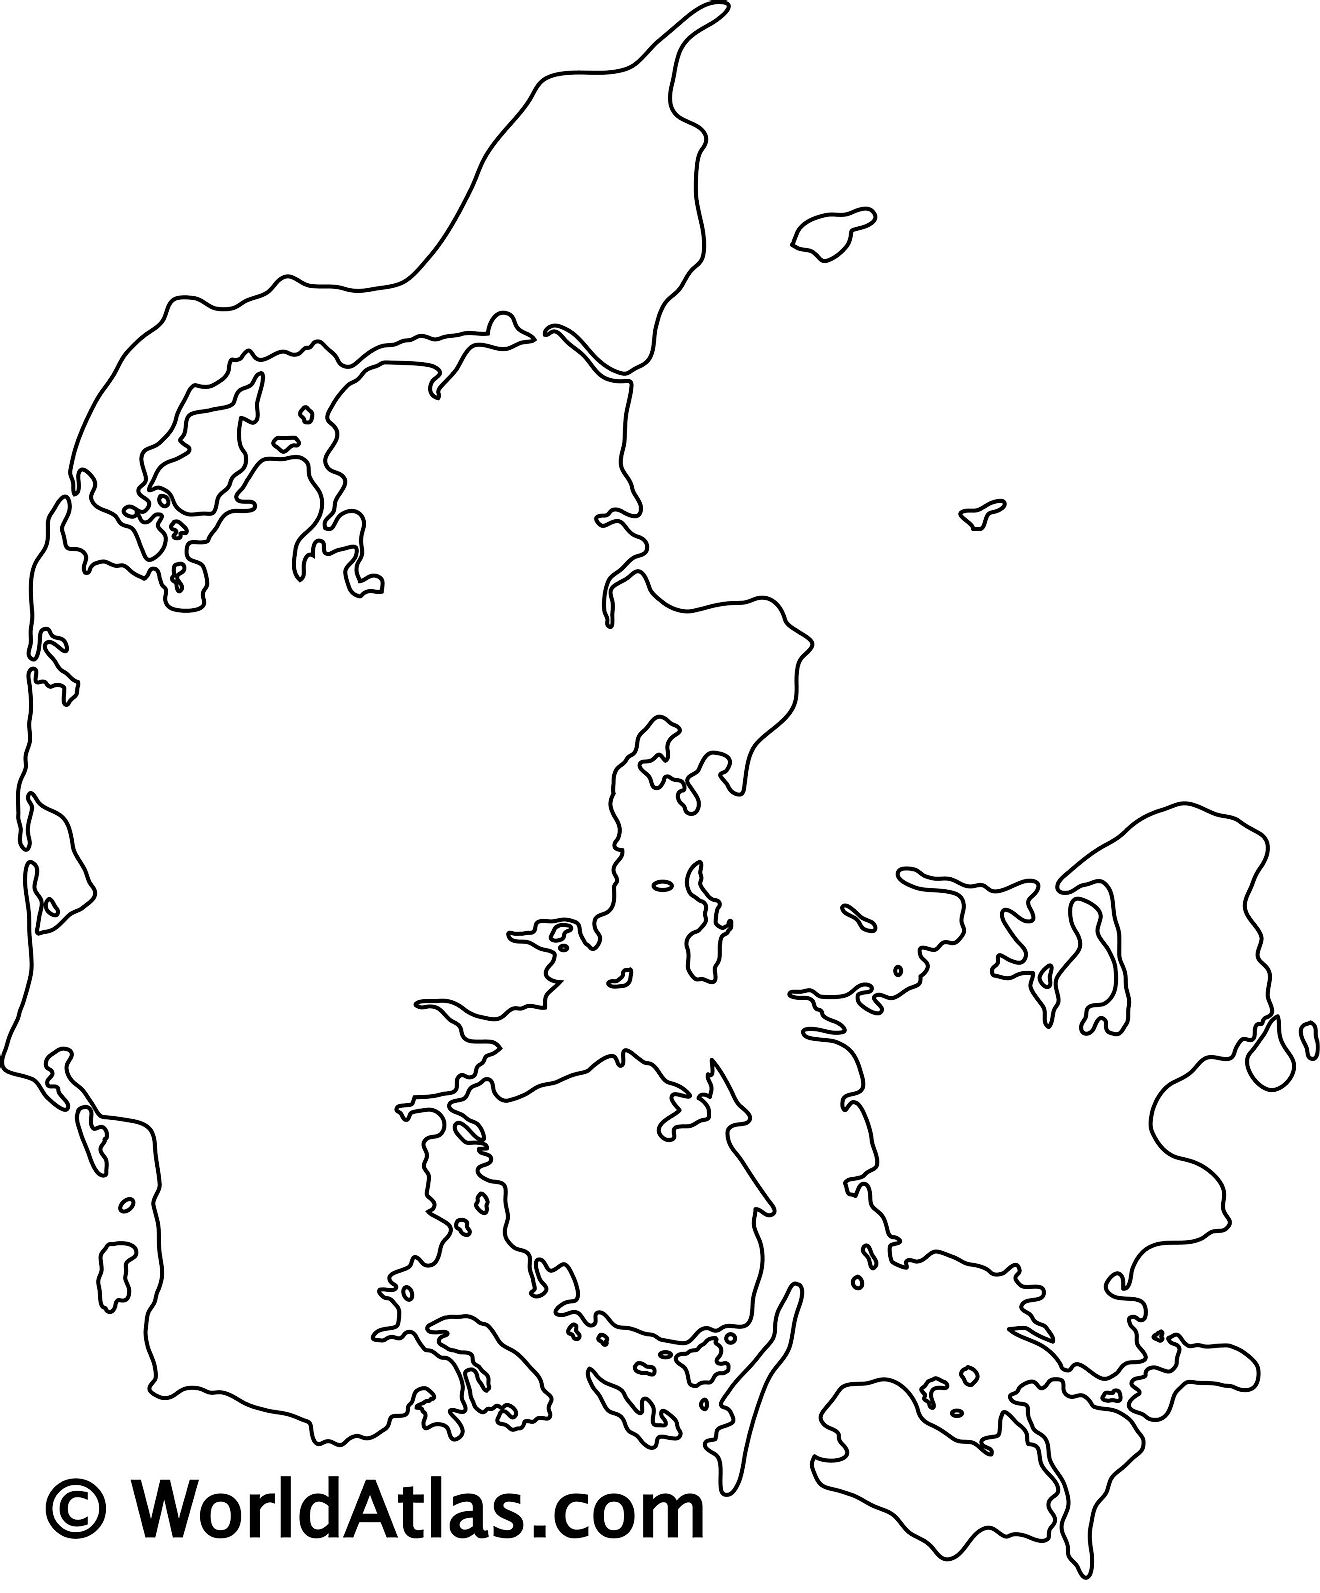 Denmark Maps & Facts - World Atlas